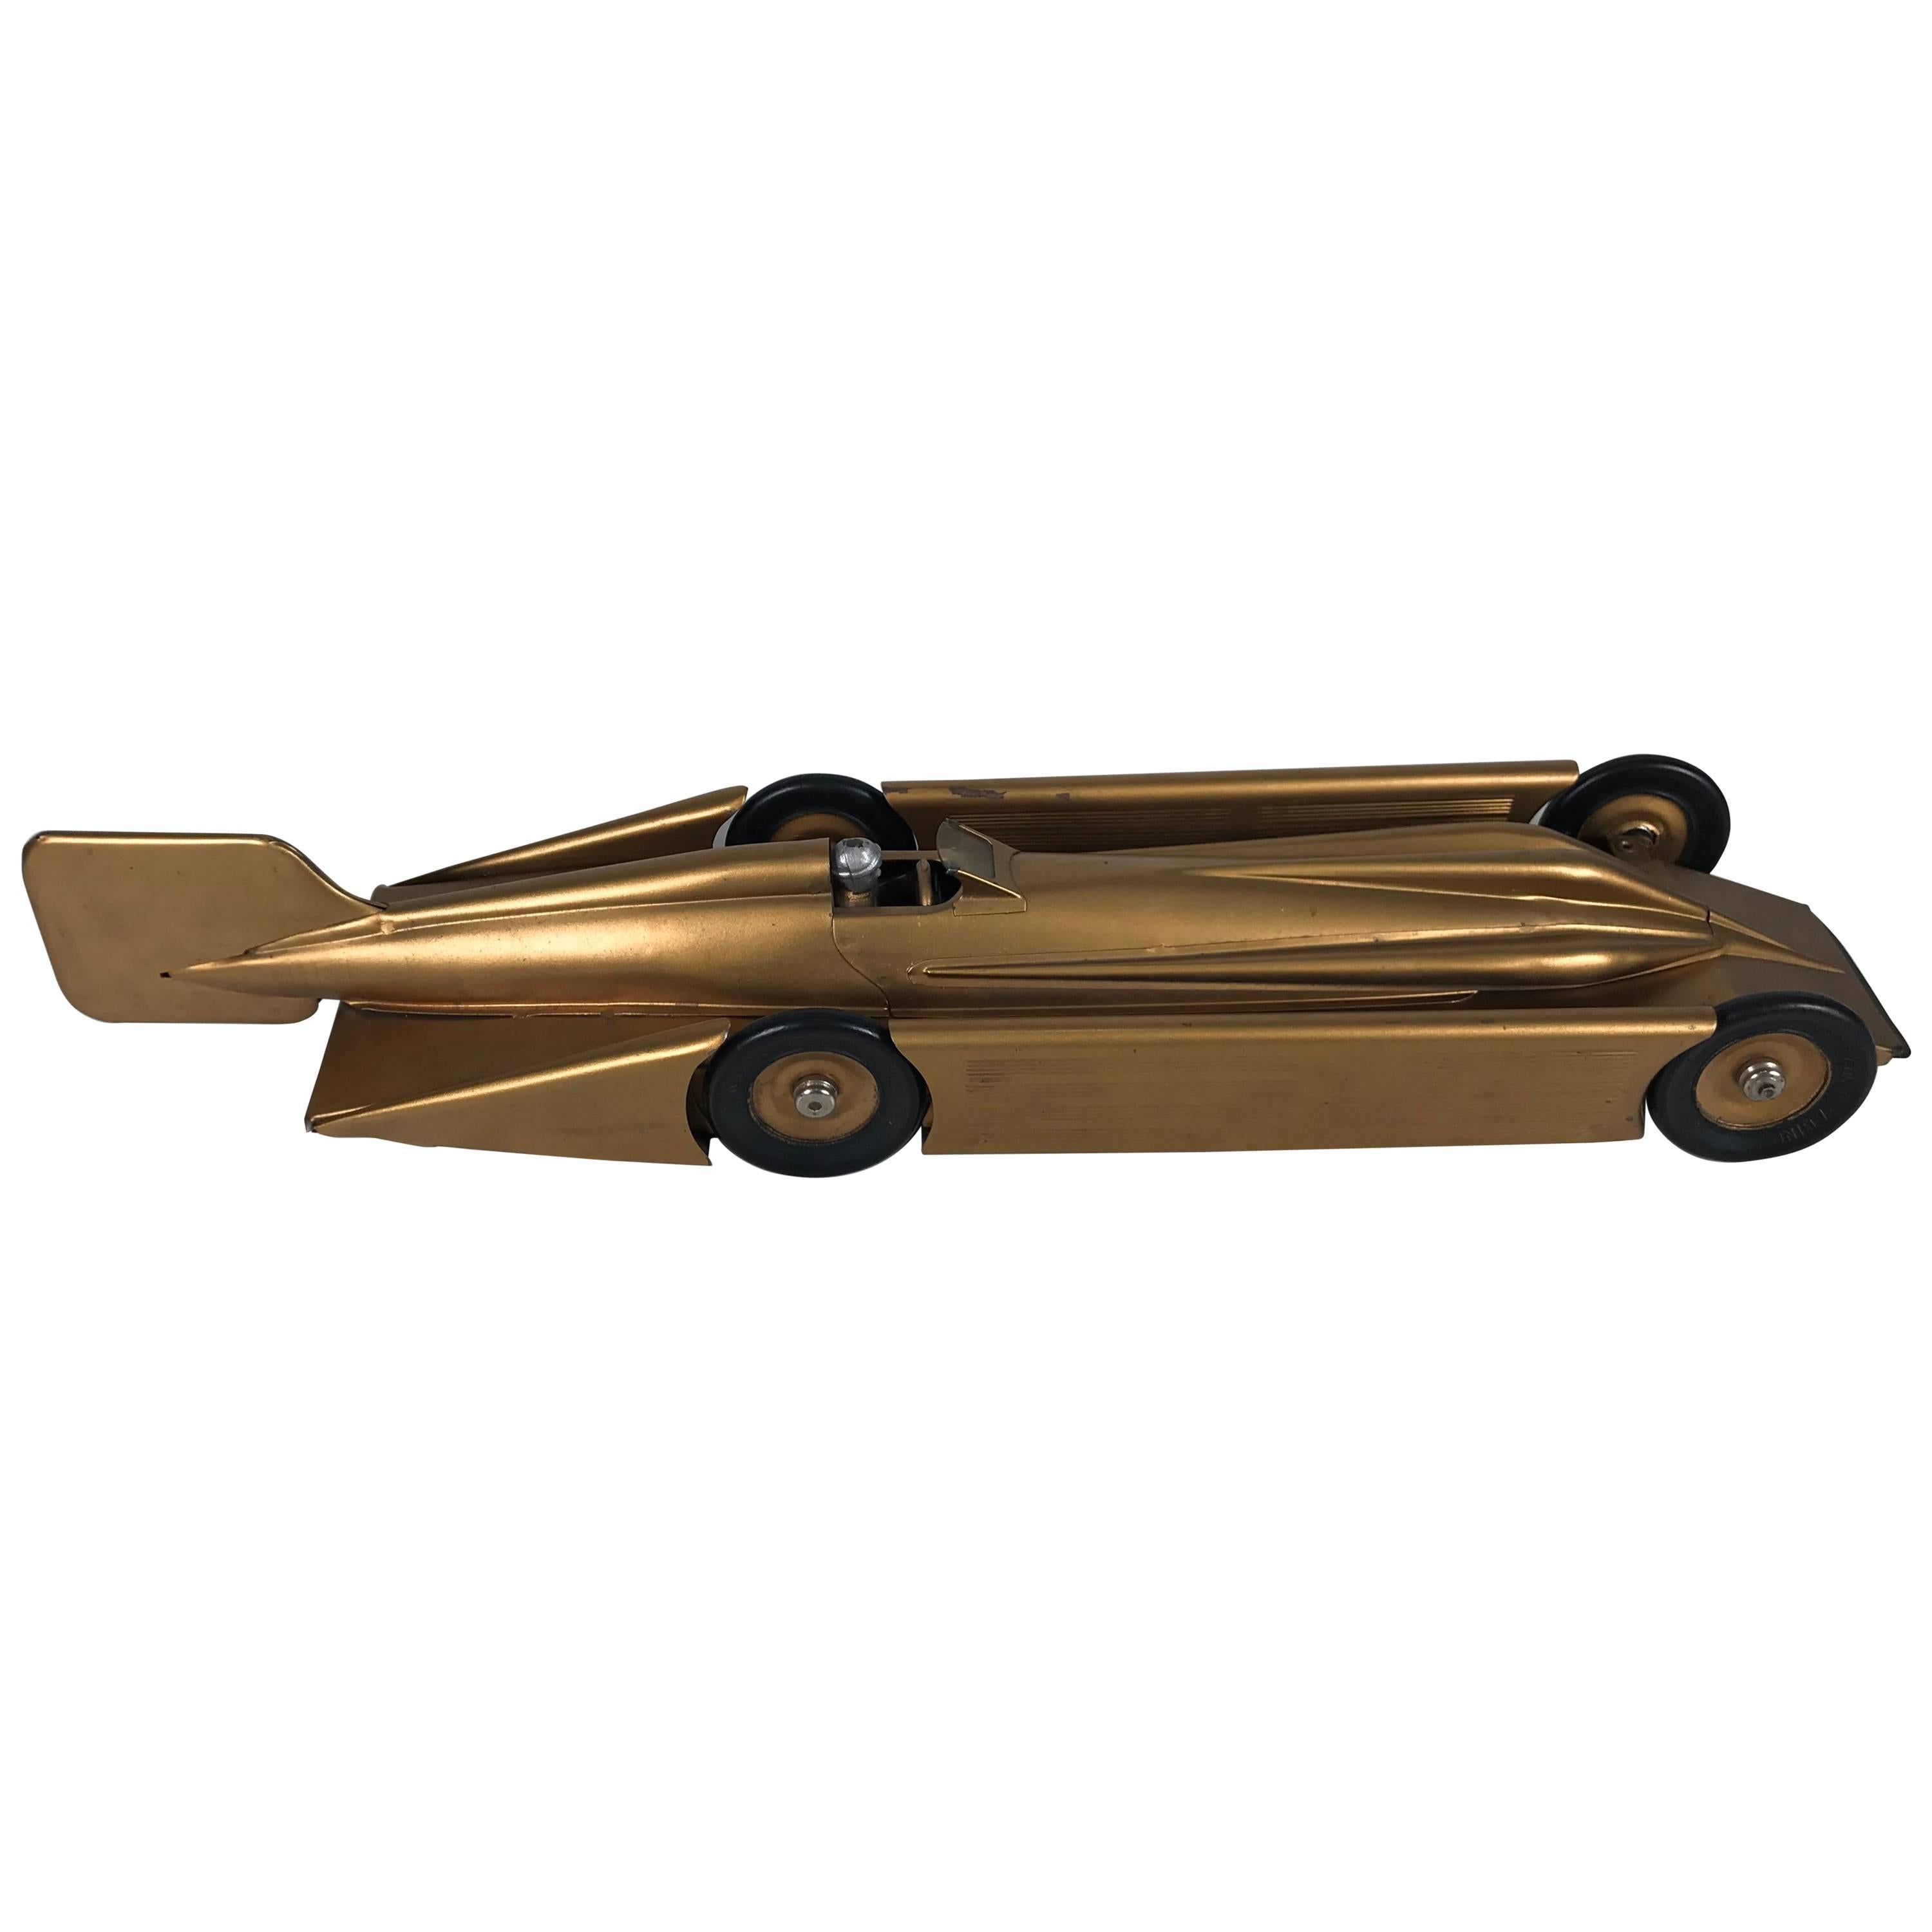 1934 Kingsbury Golden Arrow Art Deco Futurist Steel Race Car